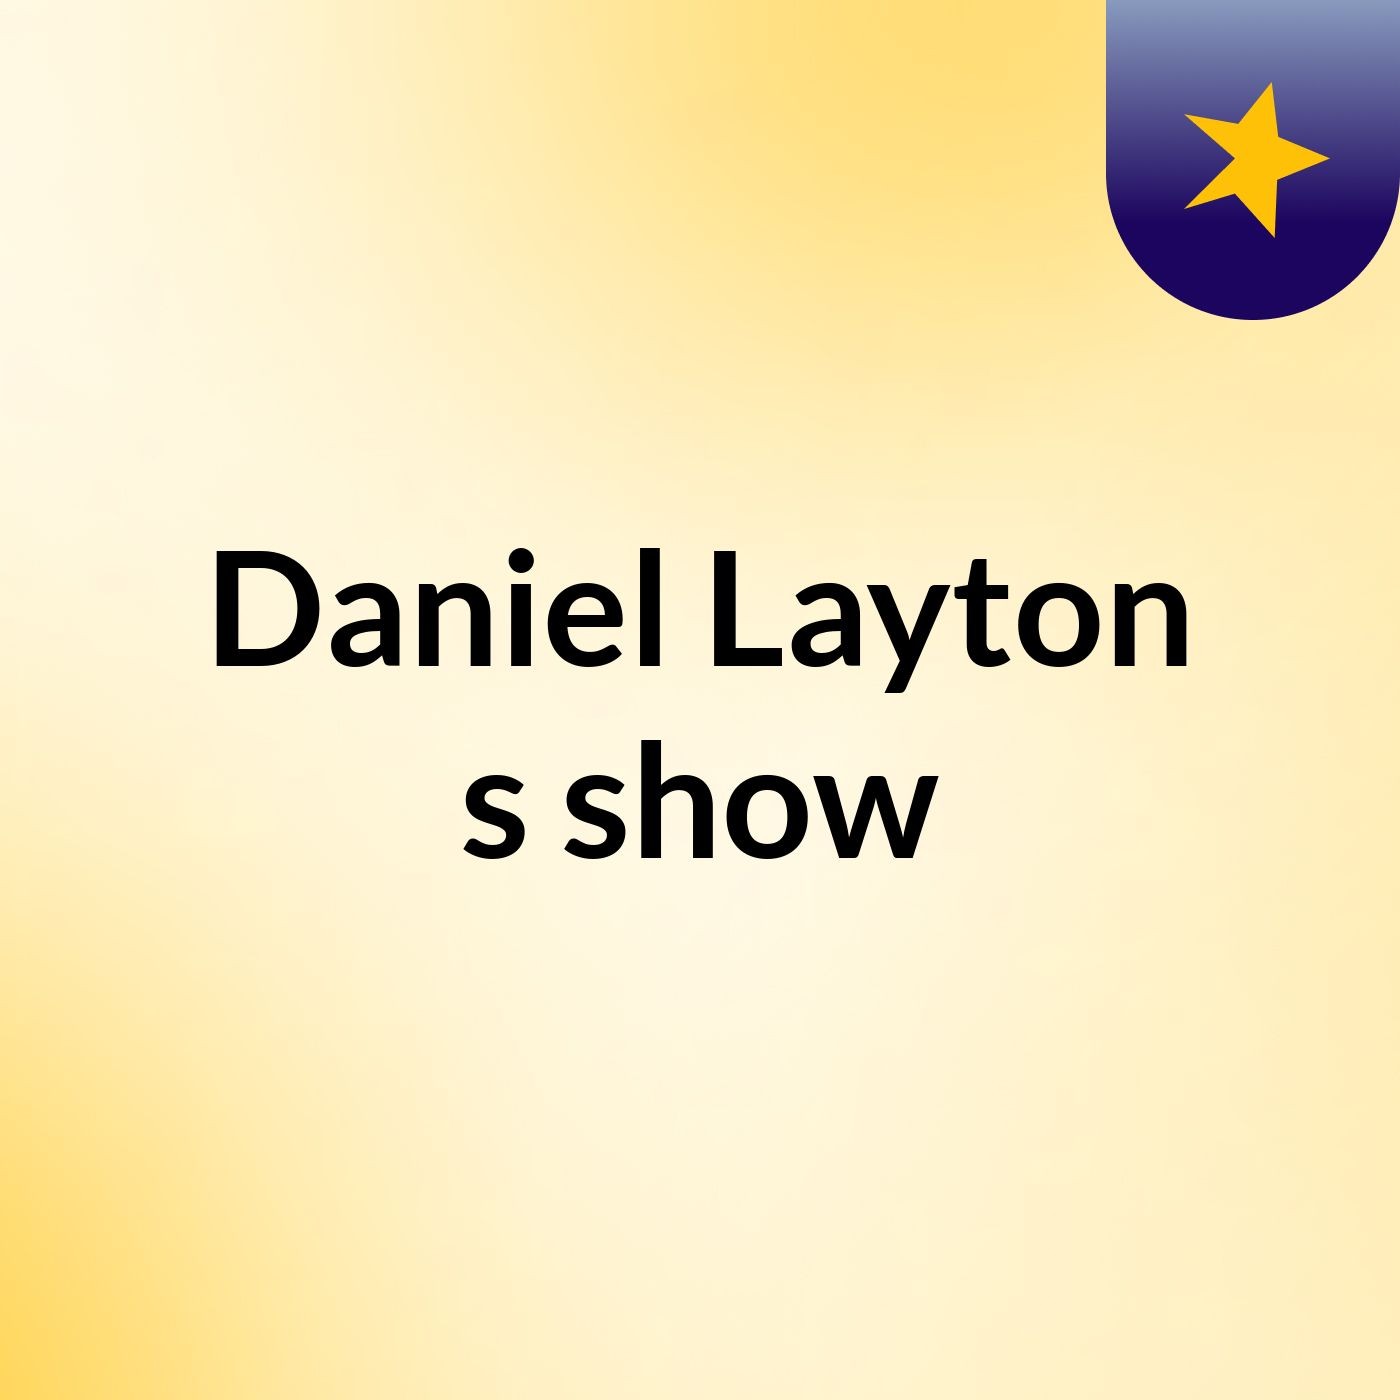 Daniel Layton's show